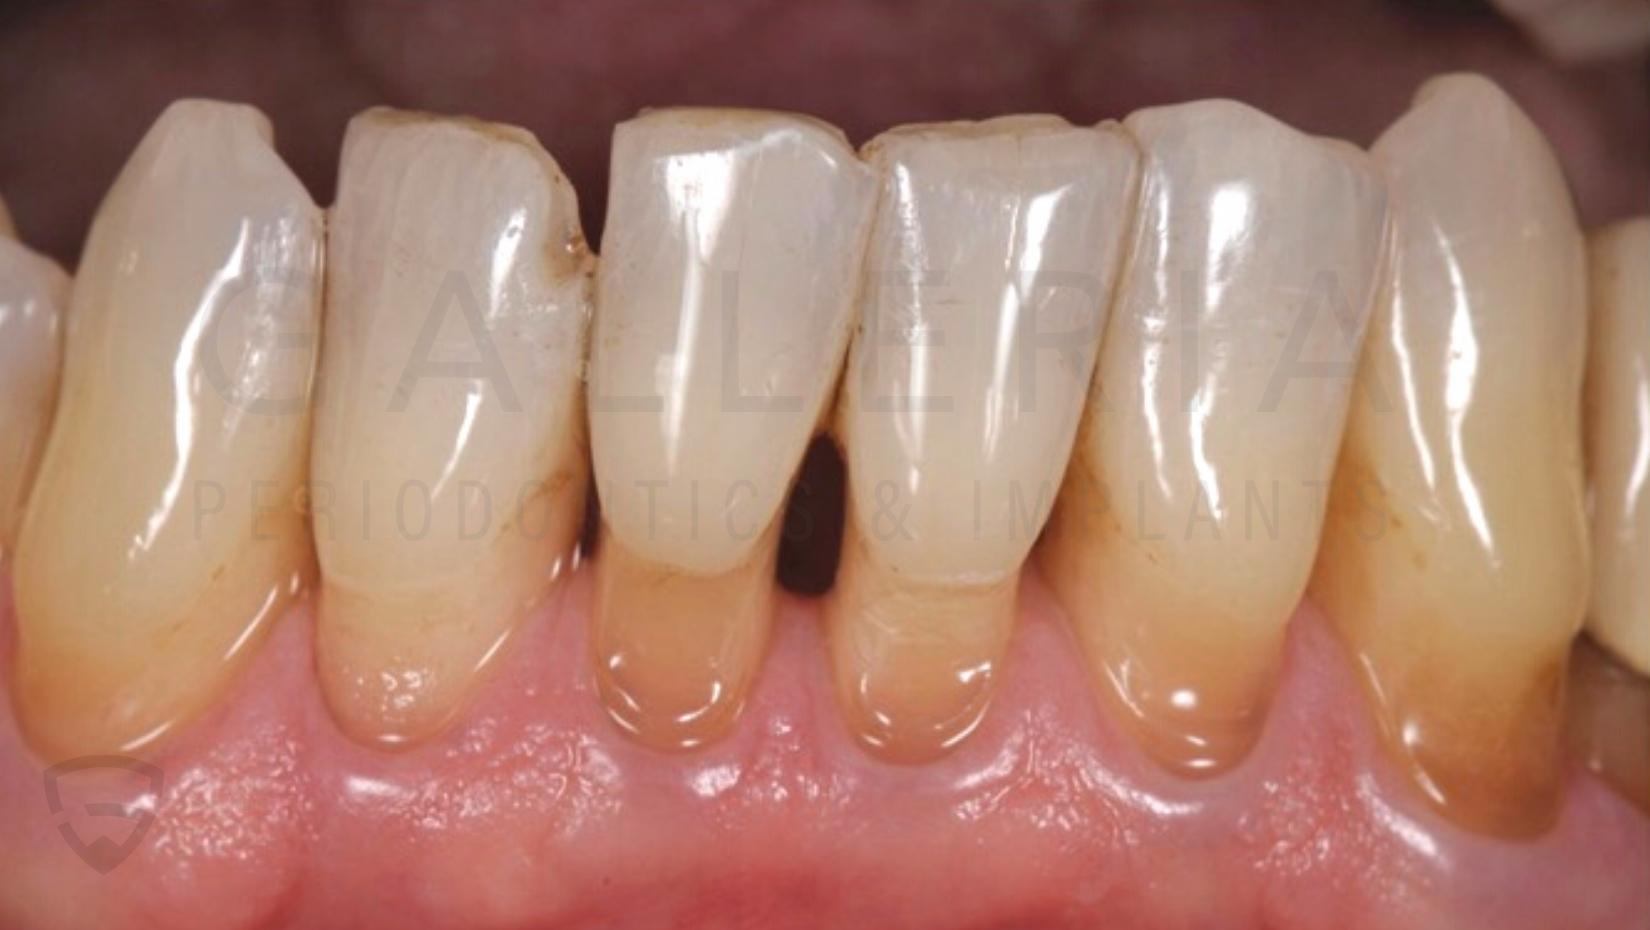 diastema, gaps between teeth